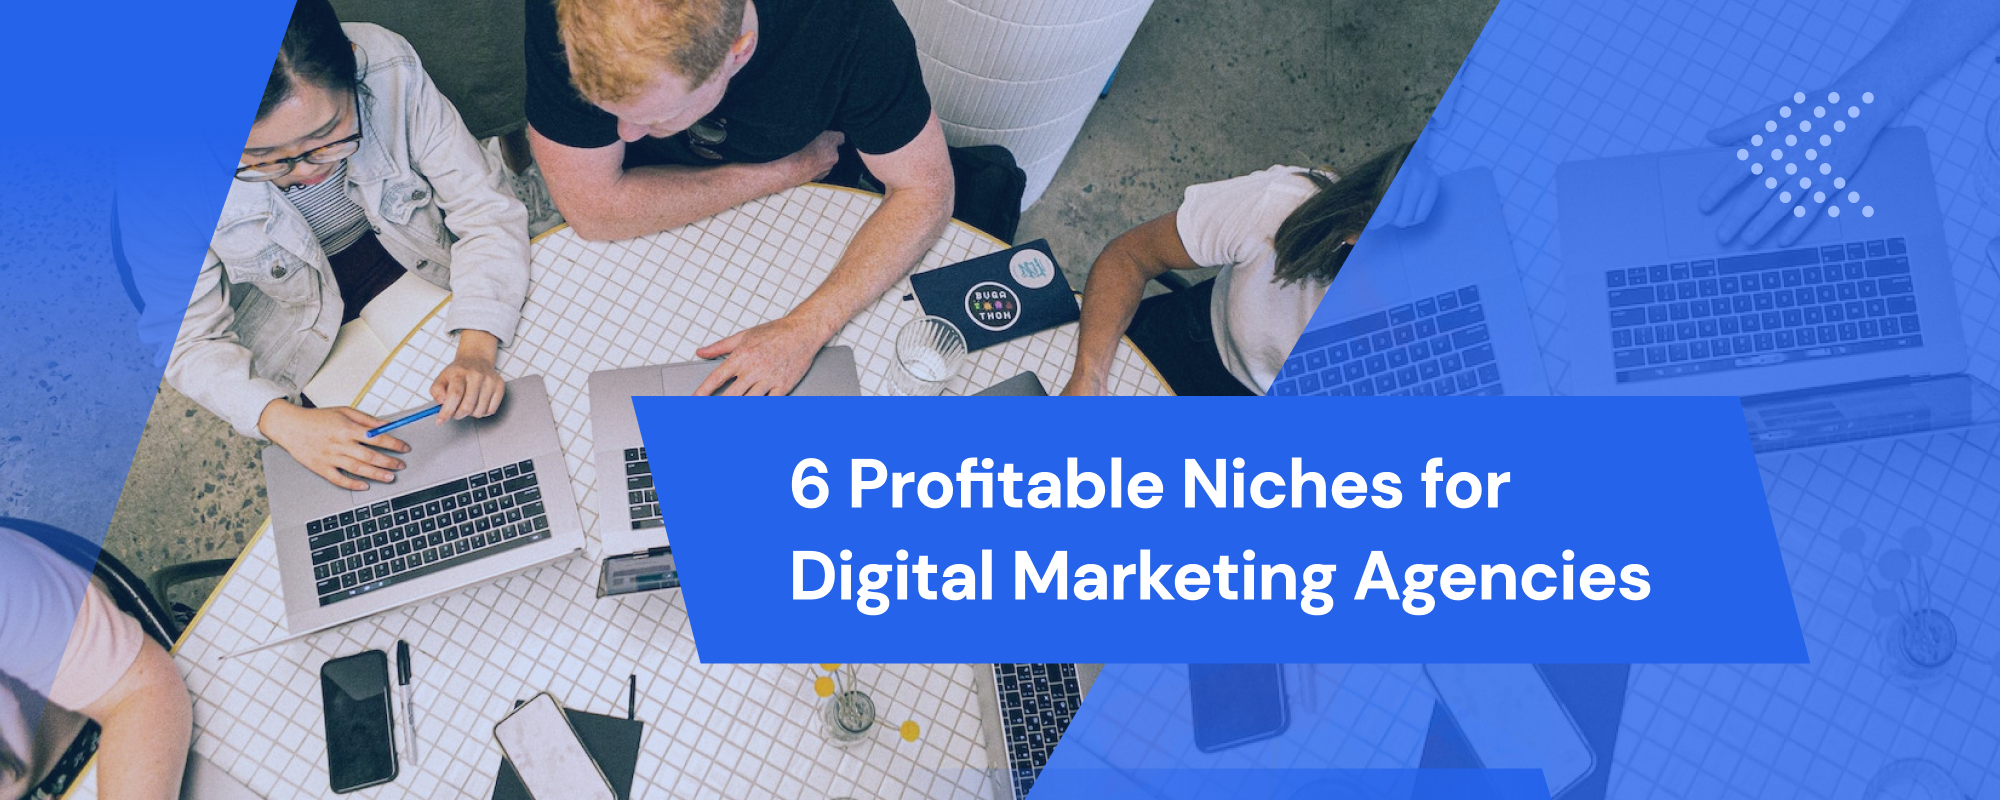 6 Profitable Niches for Digital Marketing Agencies